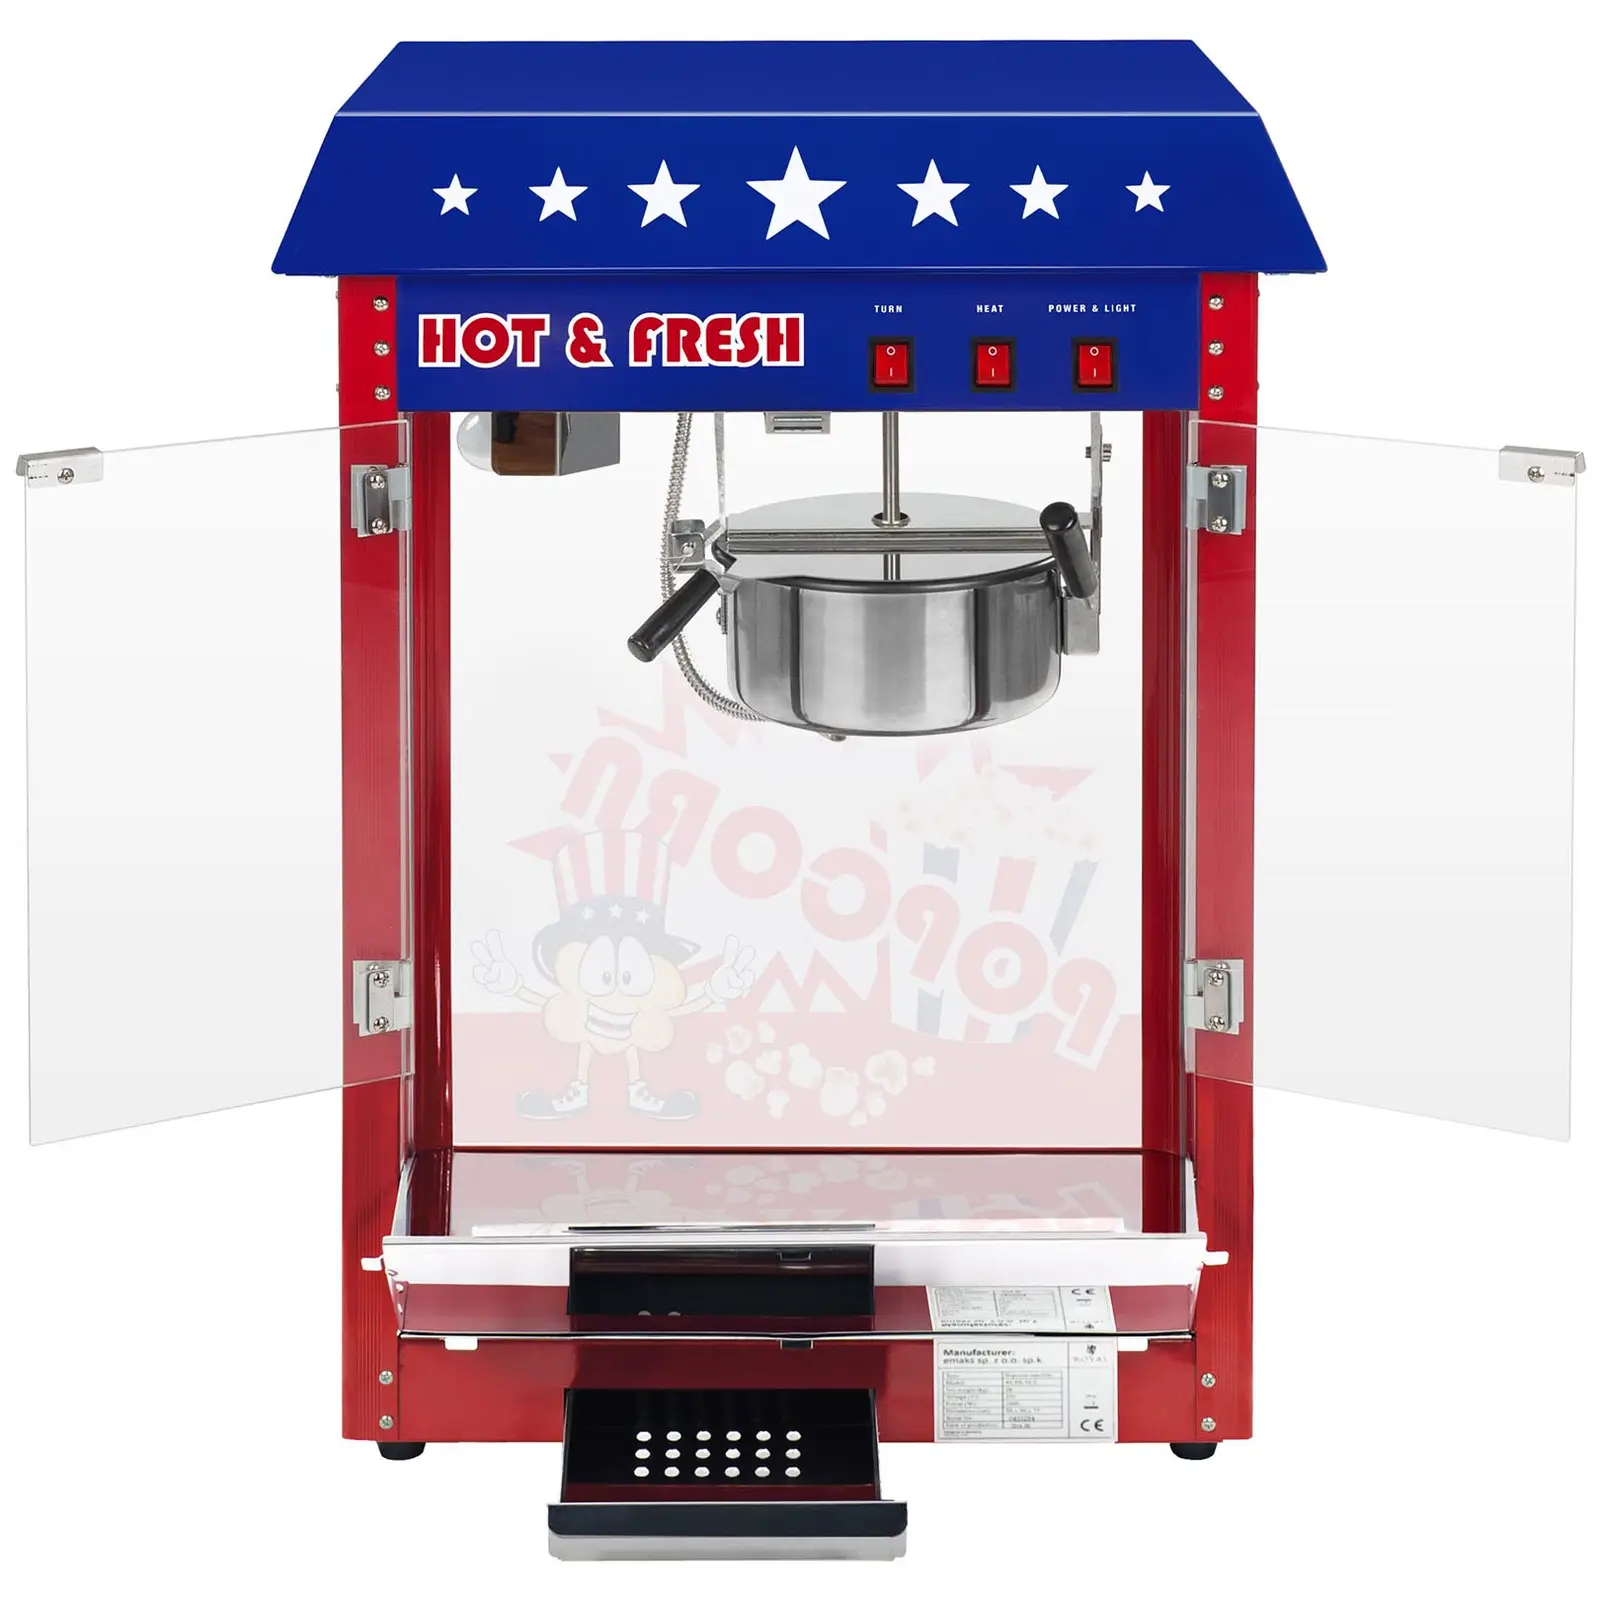 Stroj na popcorn - vr. vozíka - USA design